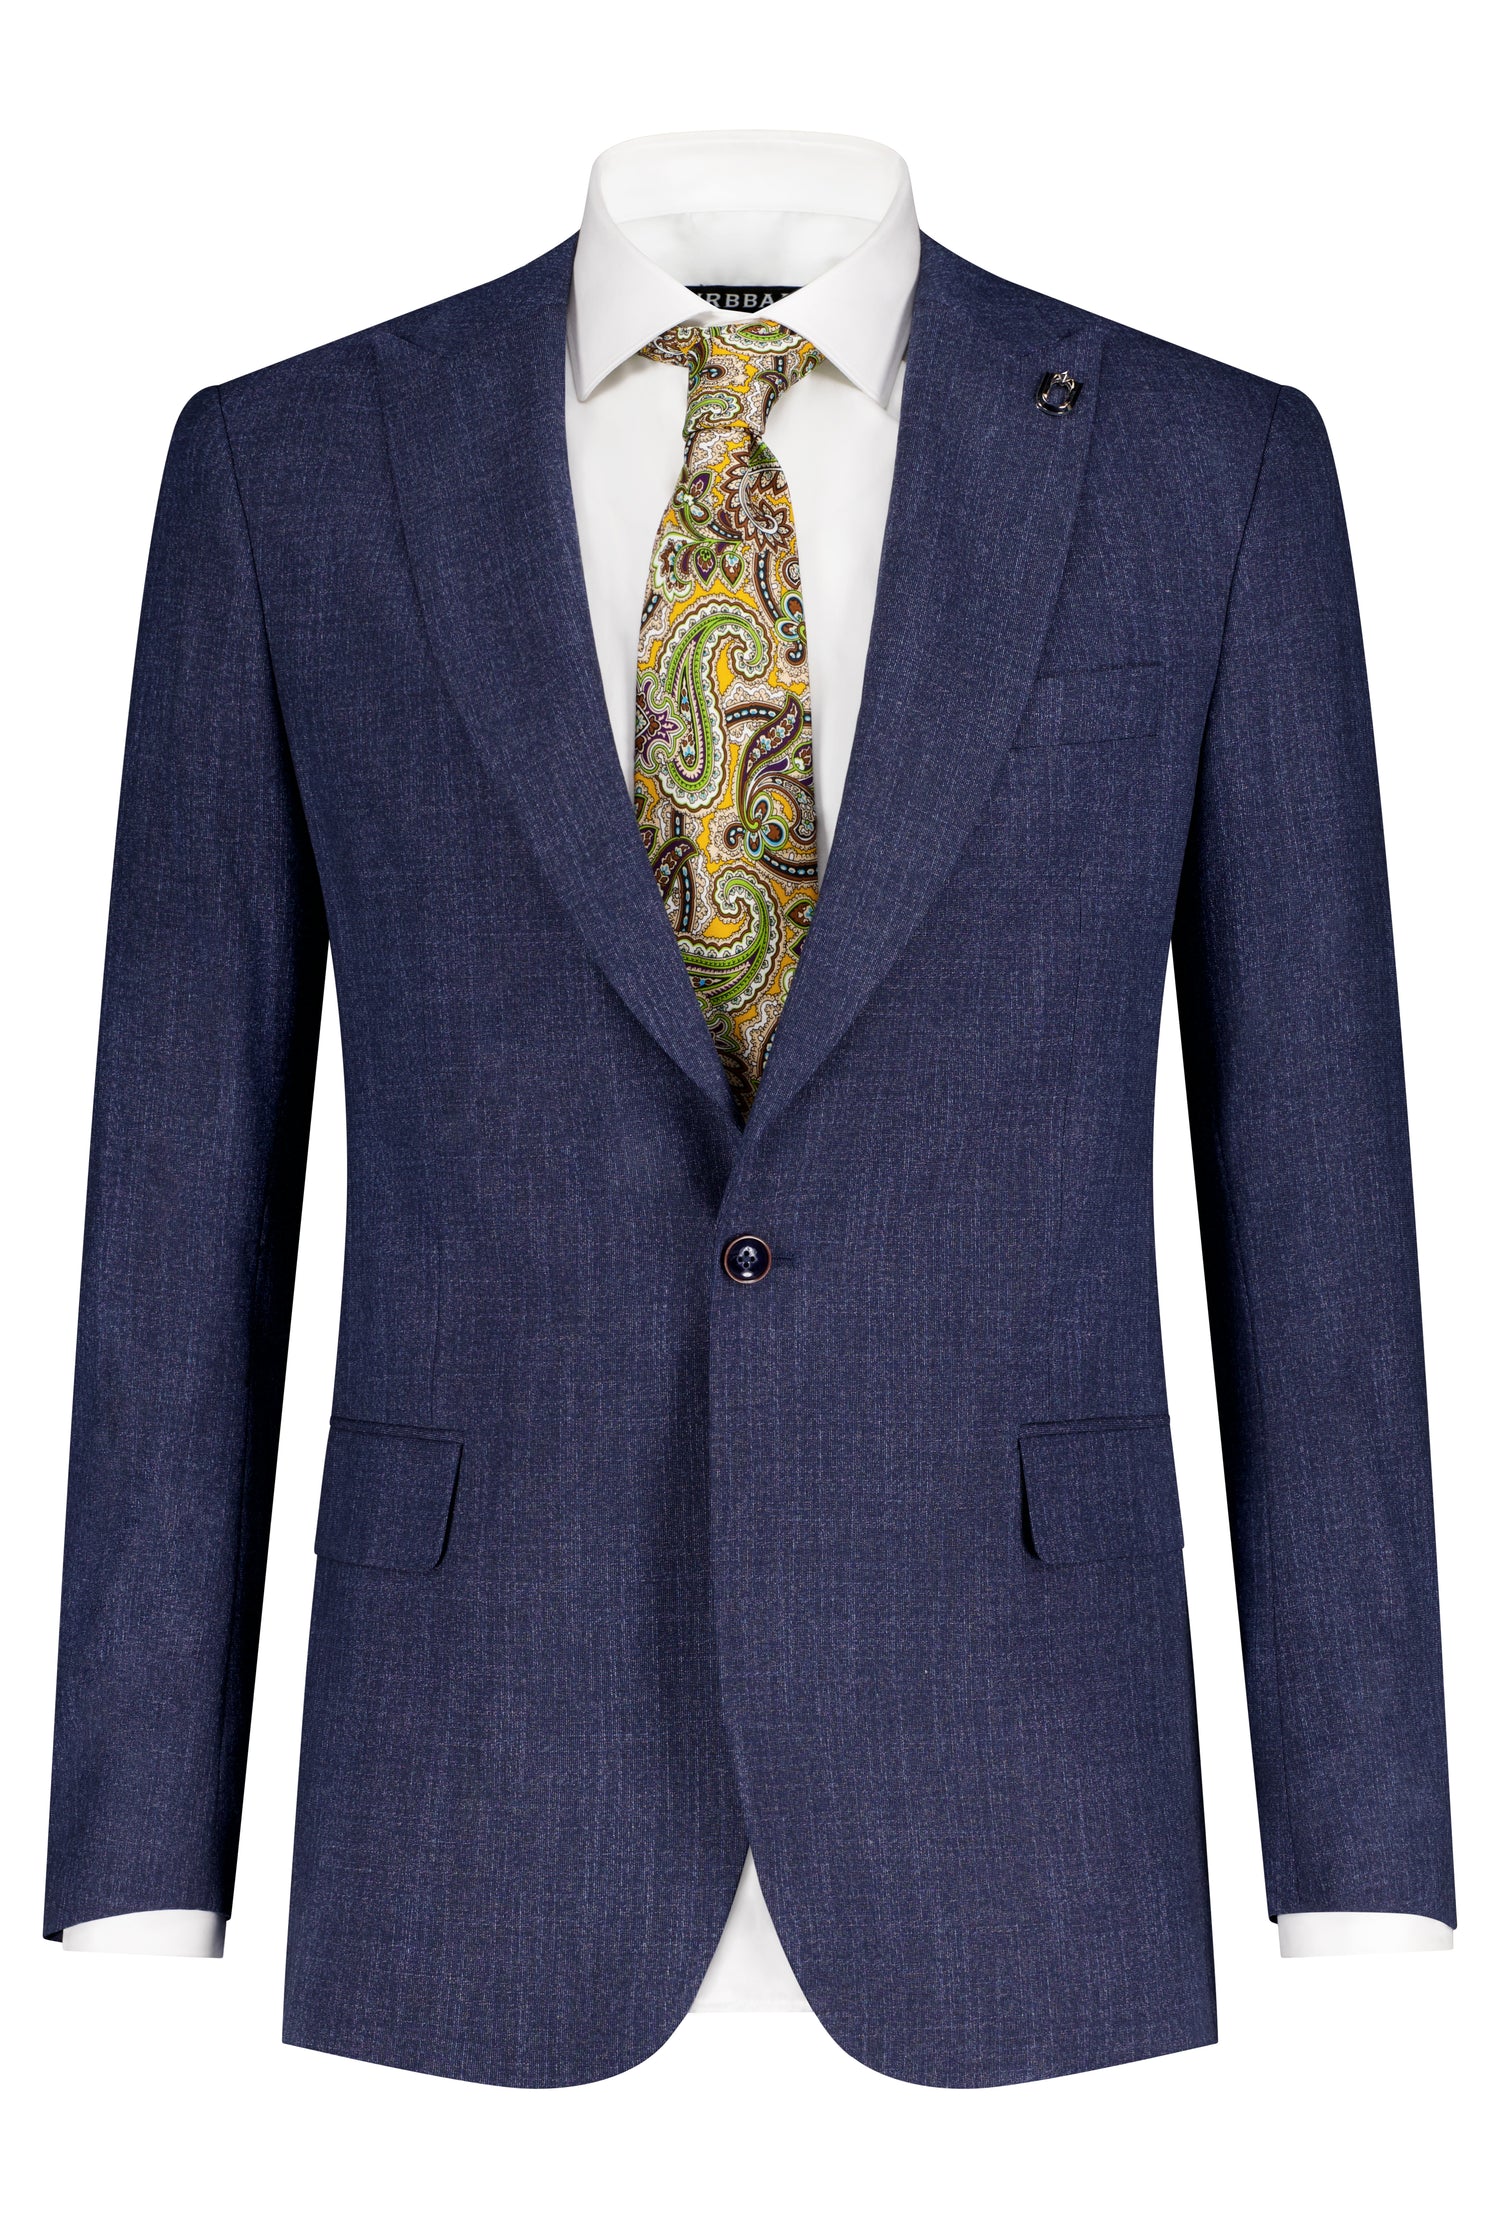 The Levinti Suit - Suit by Urbbana